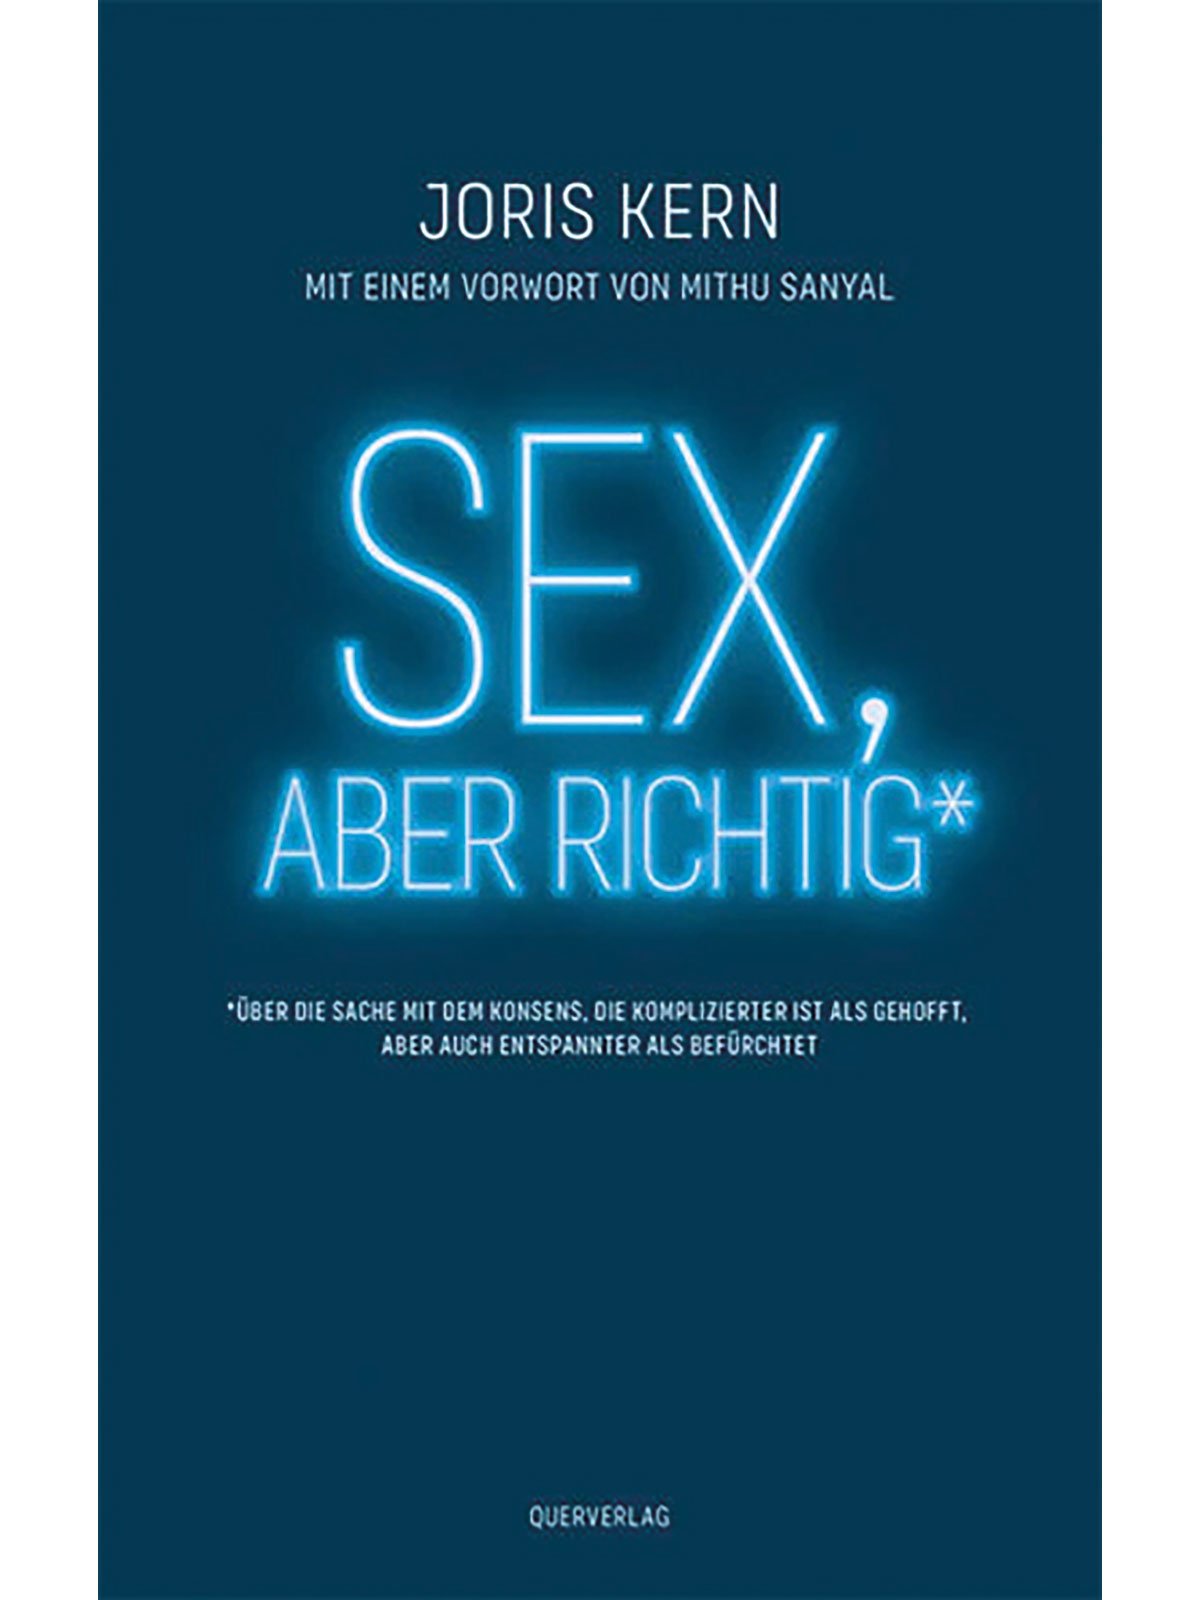 Joris Kern | Sex, aber richtig?